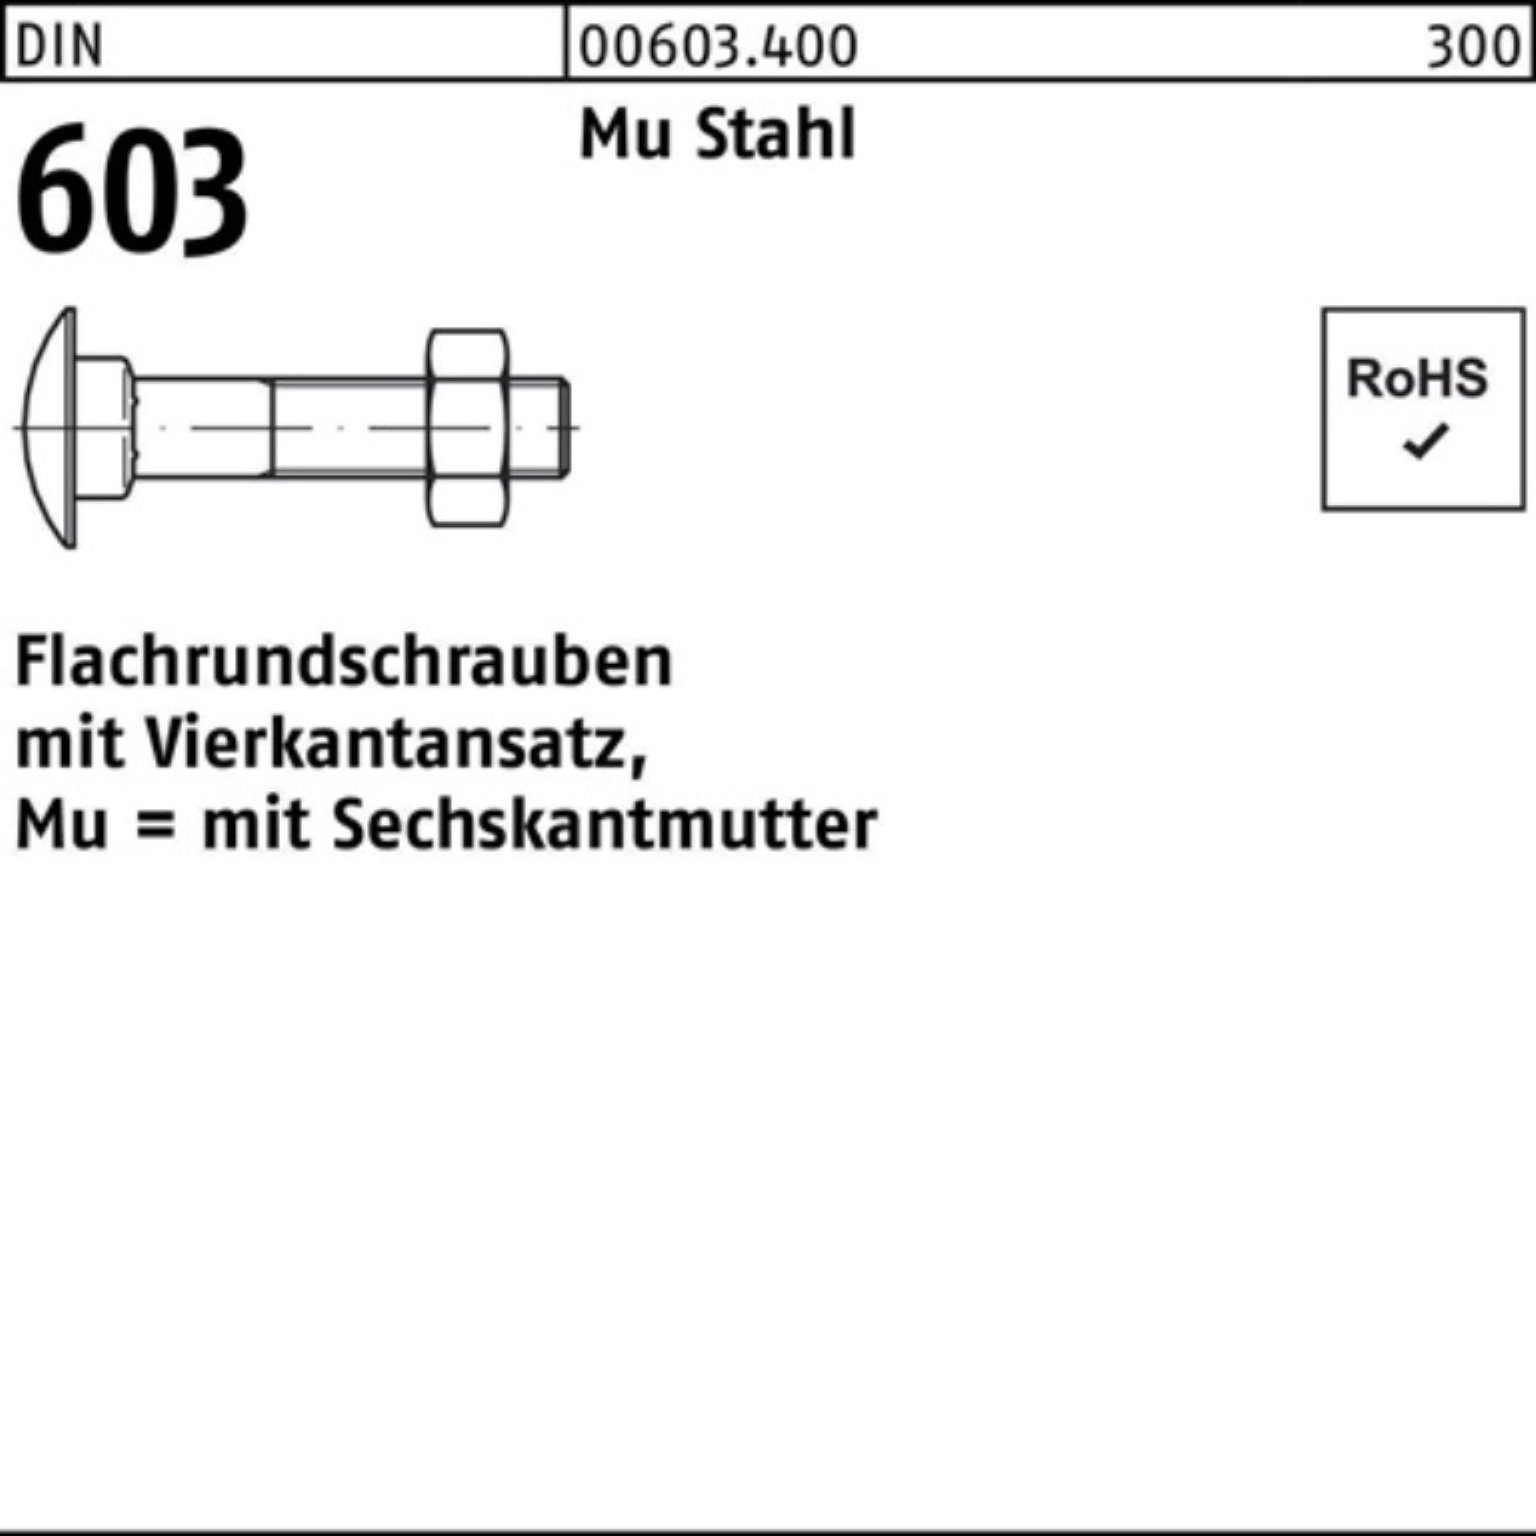 Flachrundschraube Vierkantansatz/6-ktmutter 603 Pack DIN Reyher M10x280 Schraube 100er